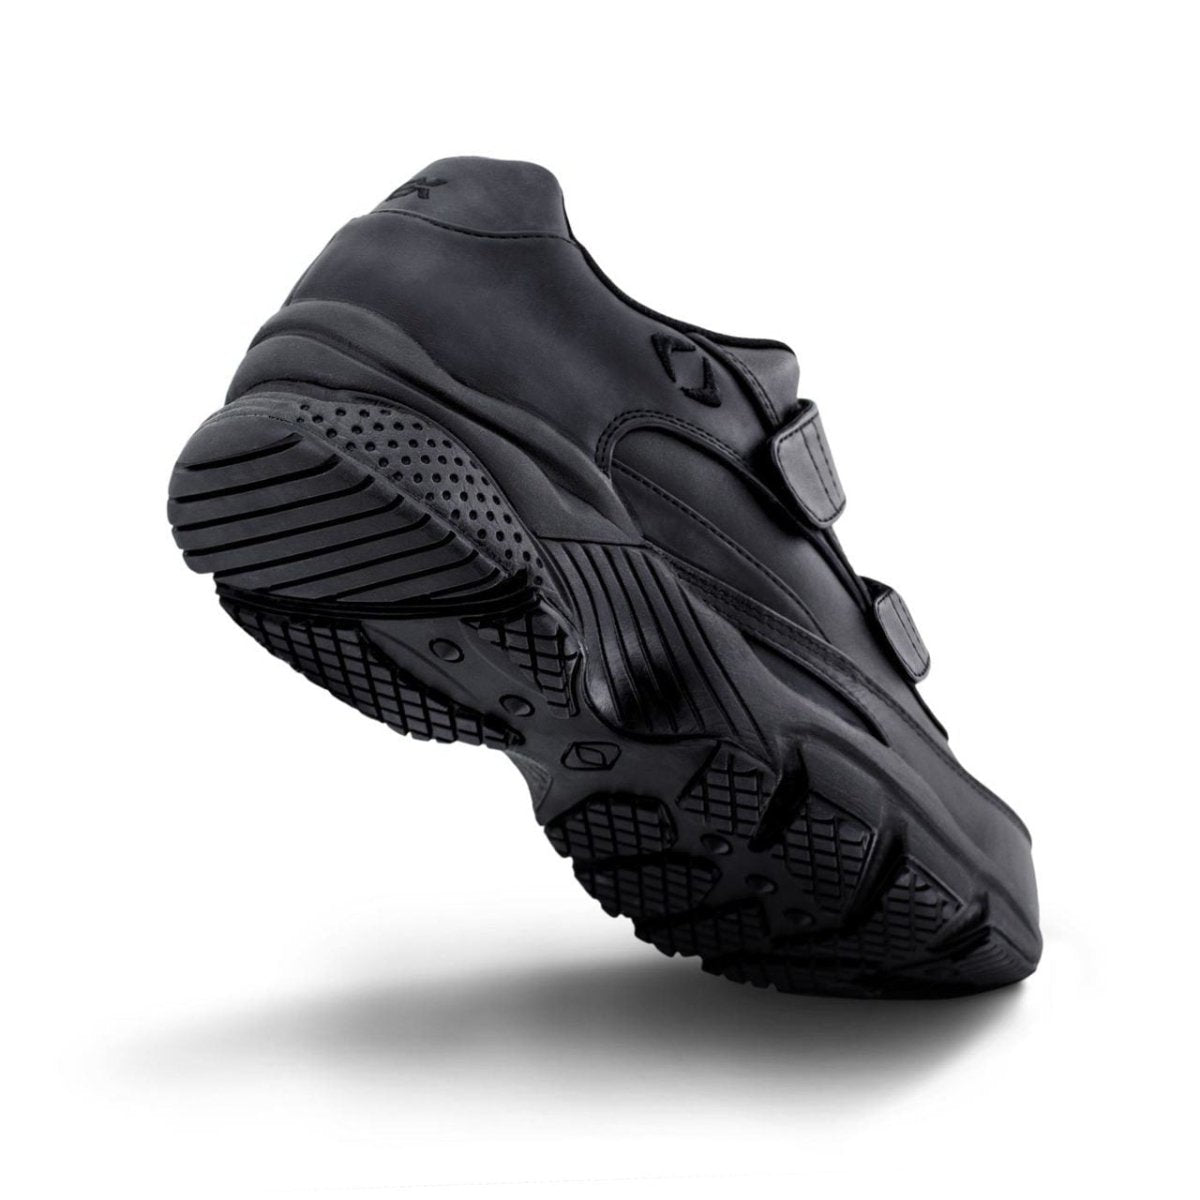 APEX X920M STRAP DBL VELCRO WALK MEN'S SHOE IN BLACK. - TLW Shoes